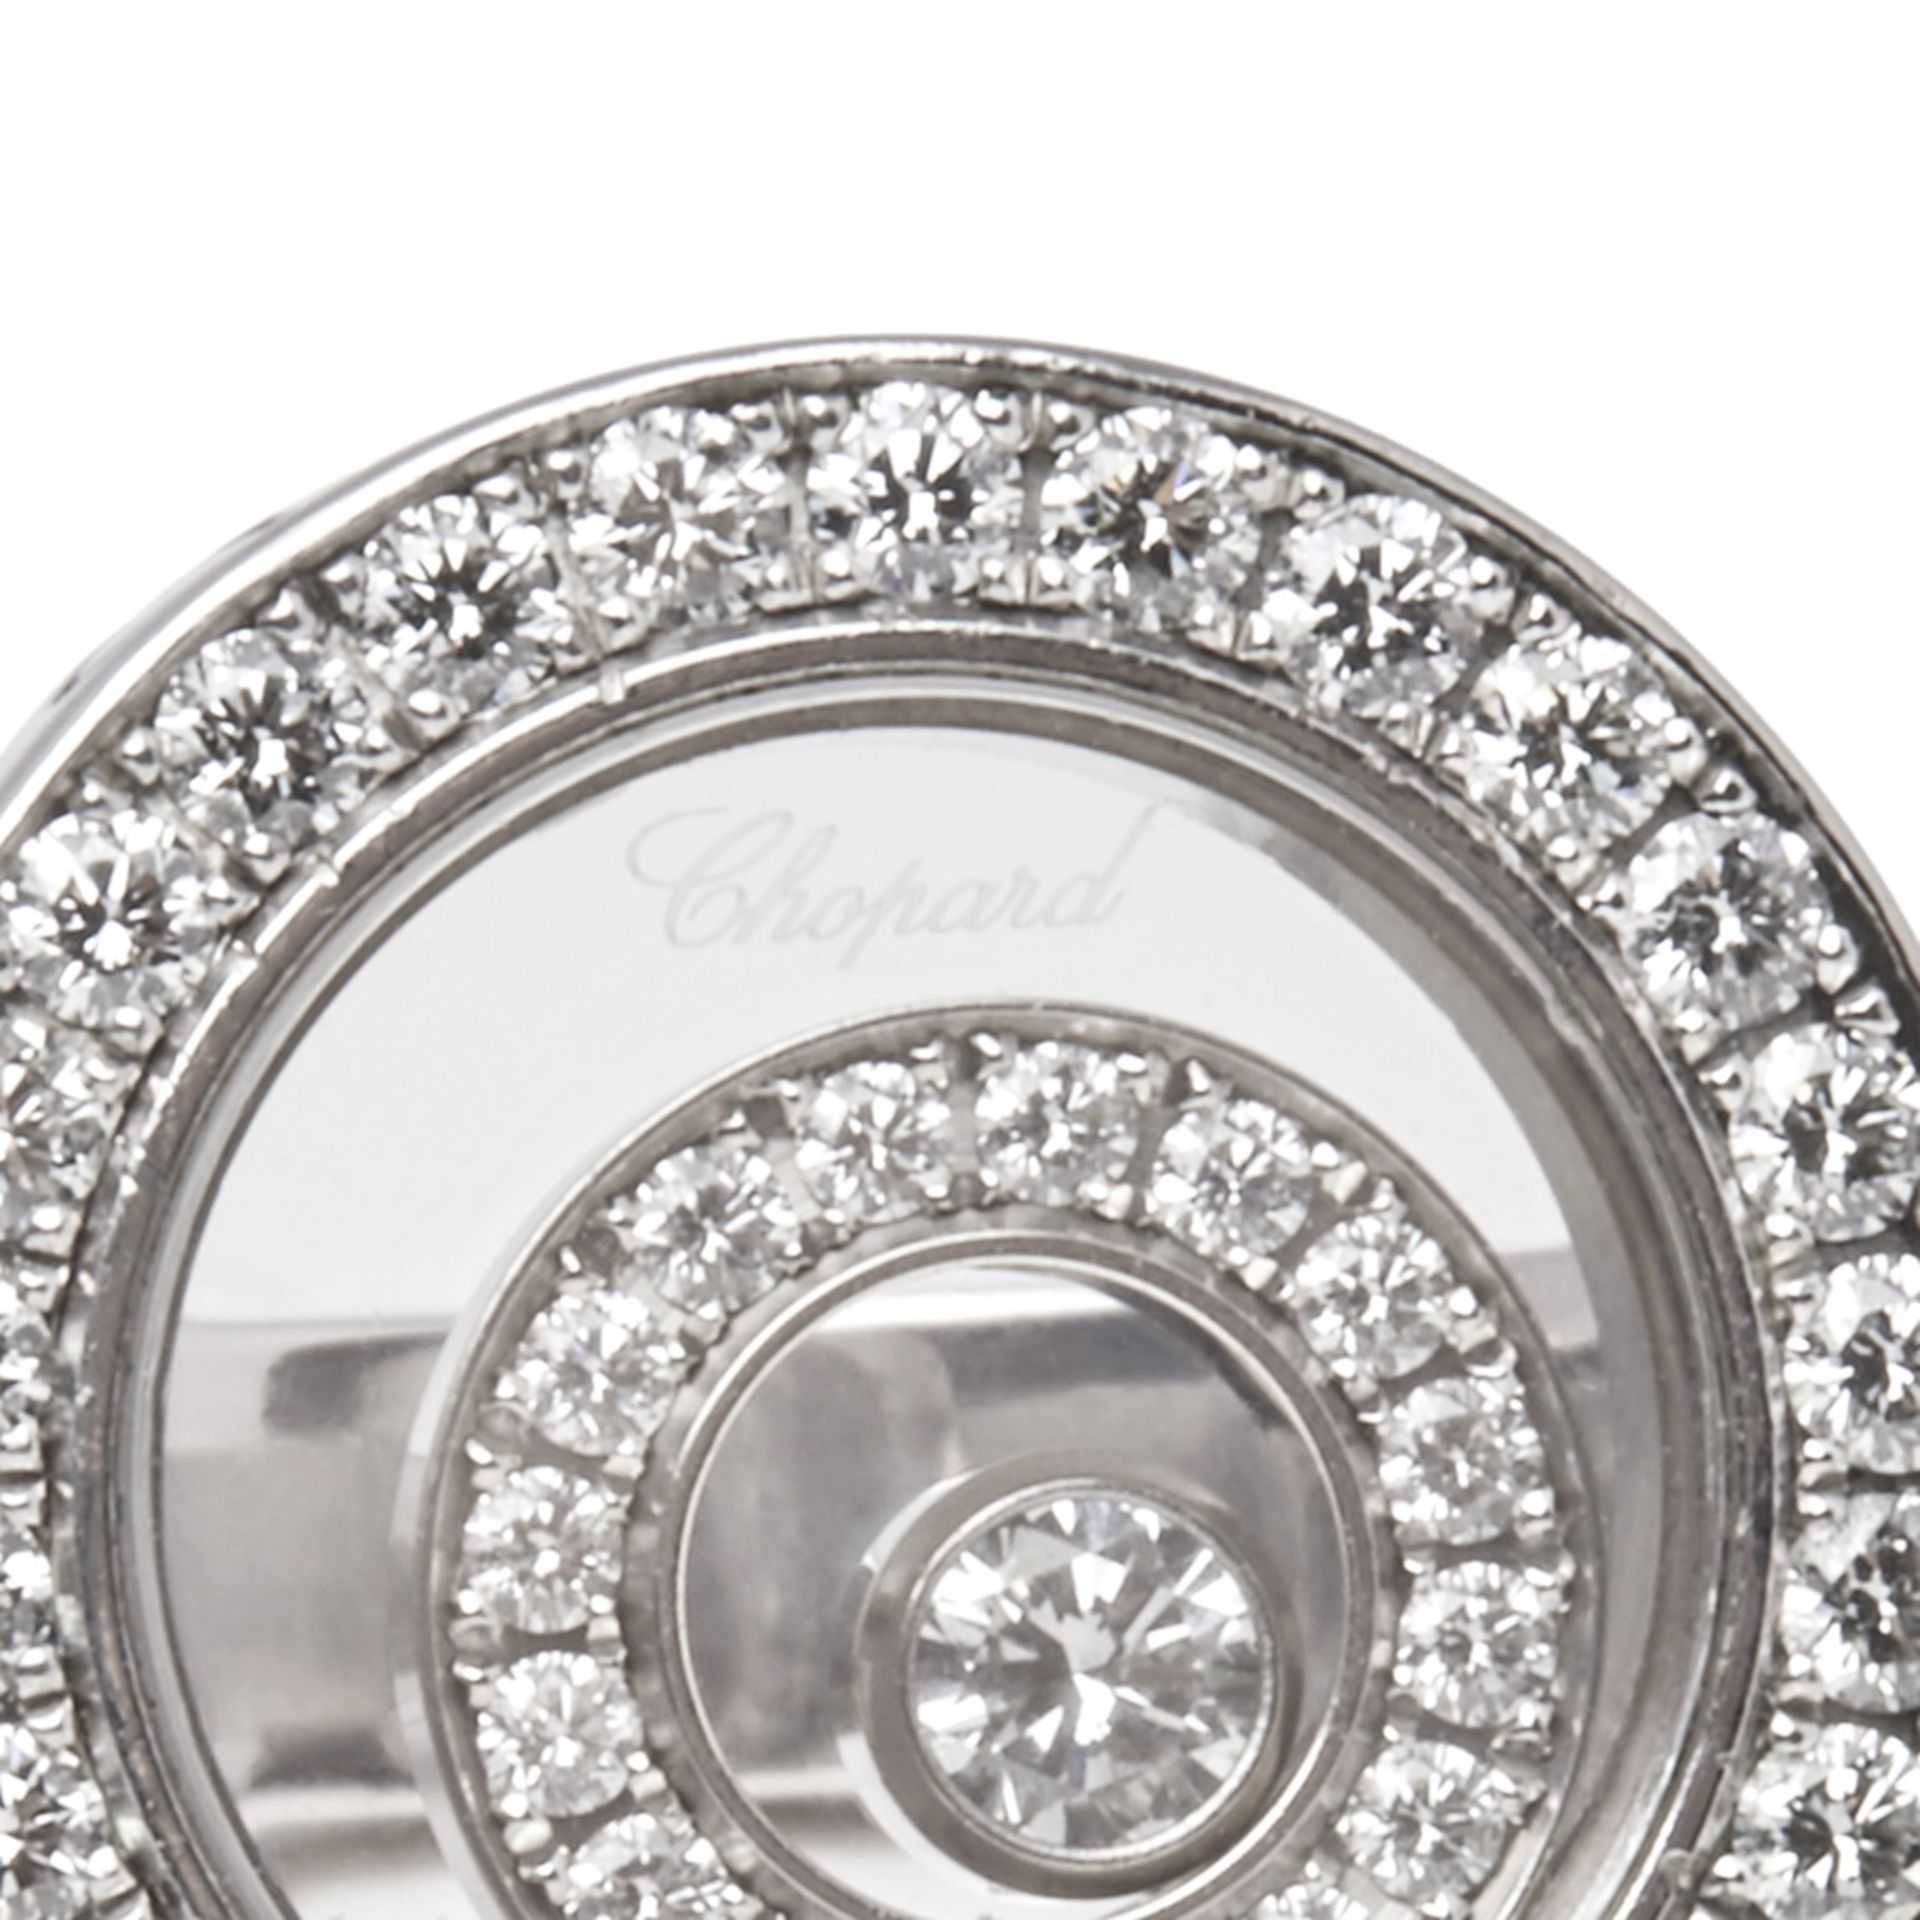 Chopard 18k White Gold Happy Spirit Ring - Image 3 of 10